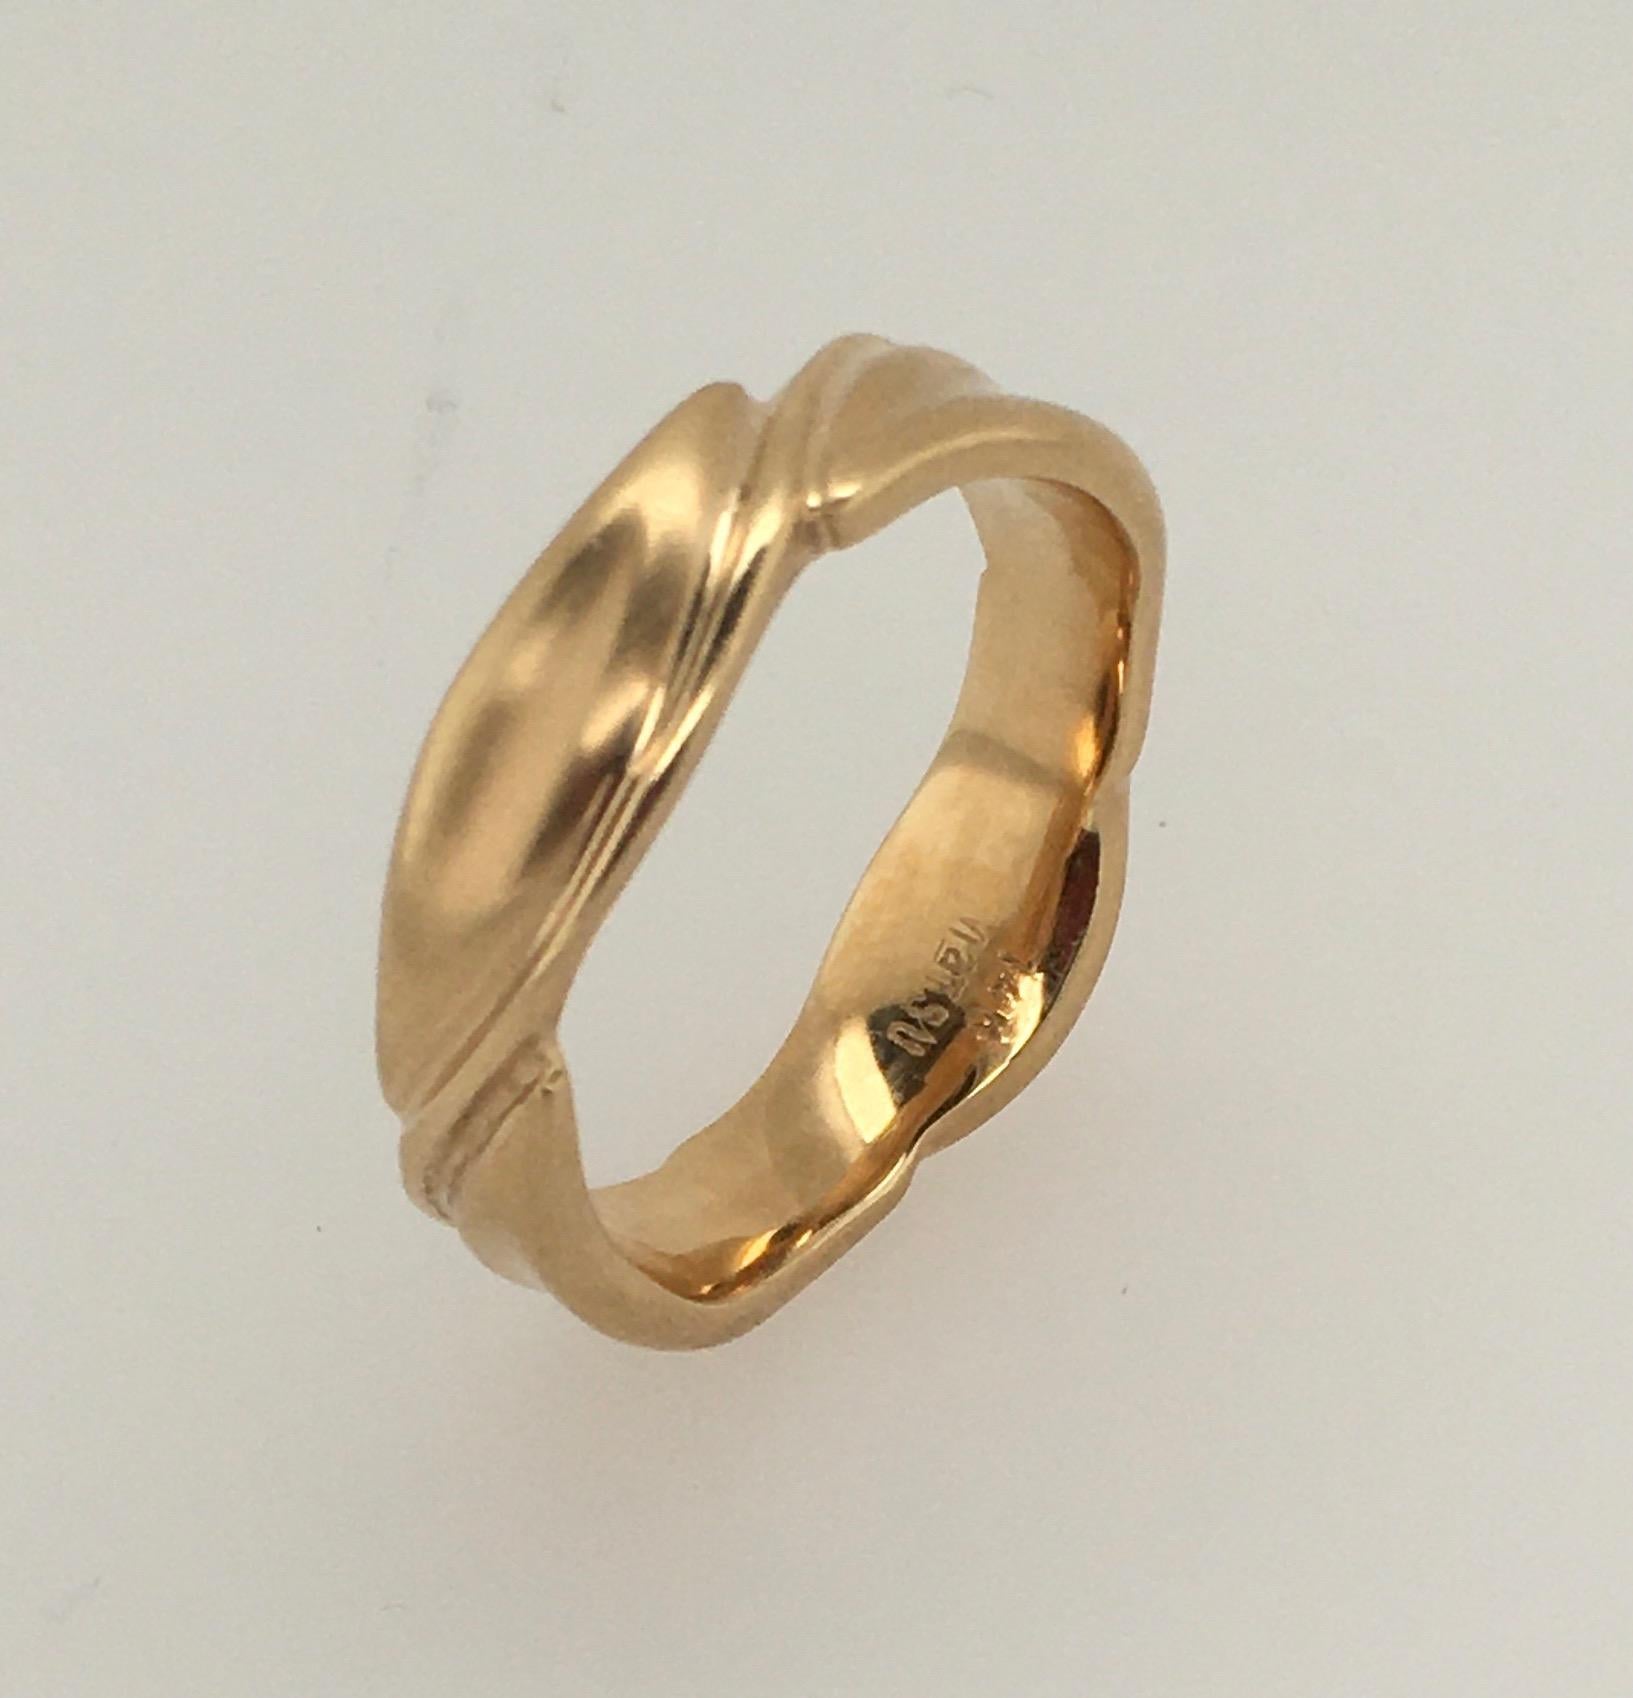 JENNIFER SHIGETOMI Stylized Gold Leaf & Vine Satin Finish Guinevere Ring For Sale 1